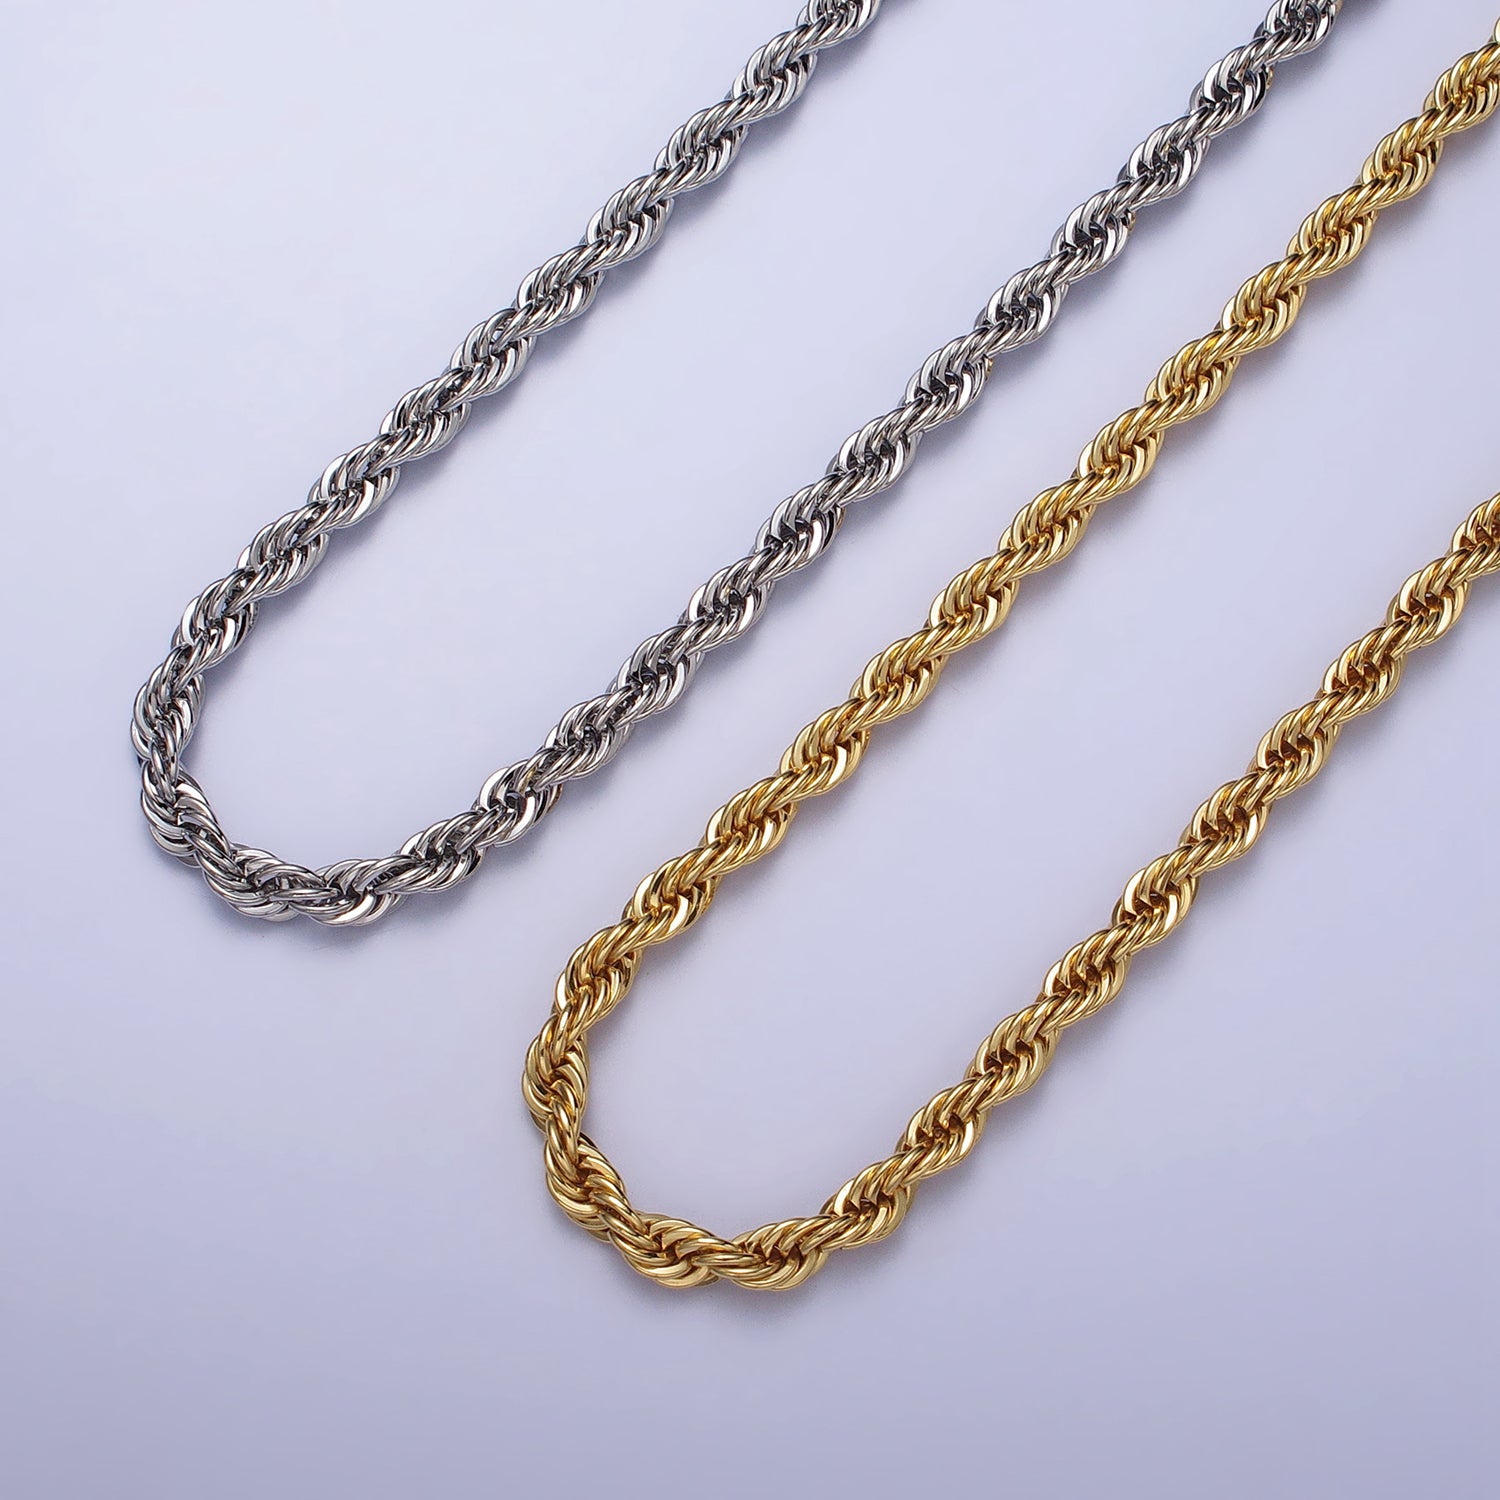 Bold Gold Rope necklace, Thick Chunky chain necklace 5mm Twist Necklace 17", 19.5 inch + 2 inch extender WA-1532 WA-1533 WA-1534 WA-1535 - DLUXCA